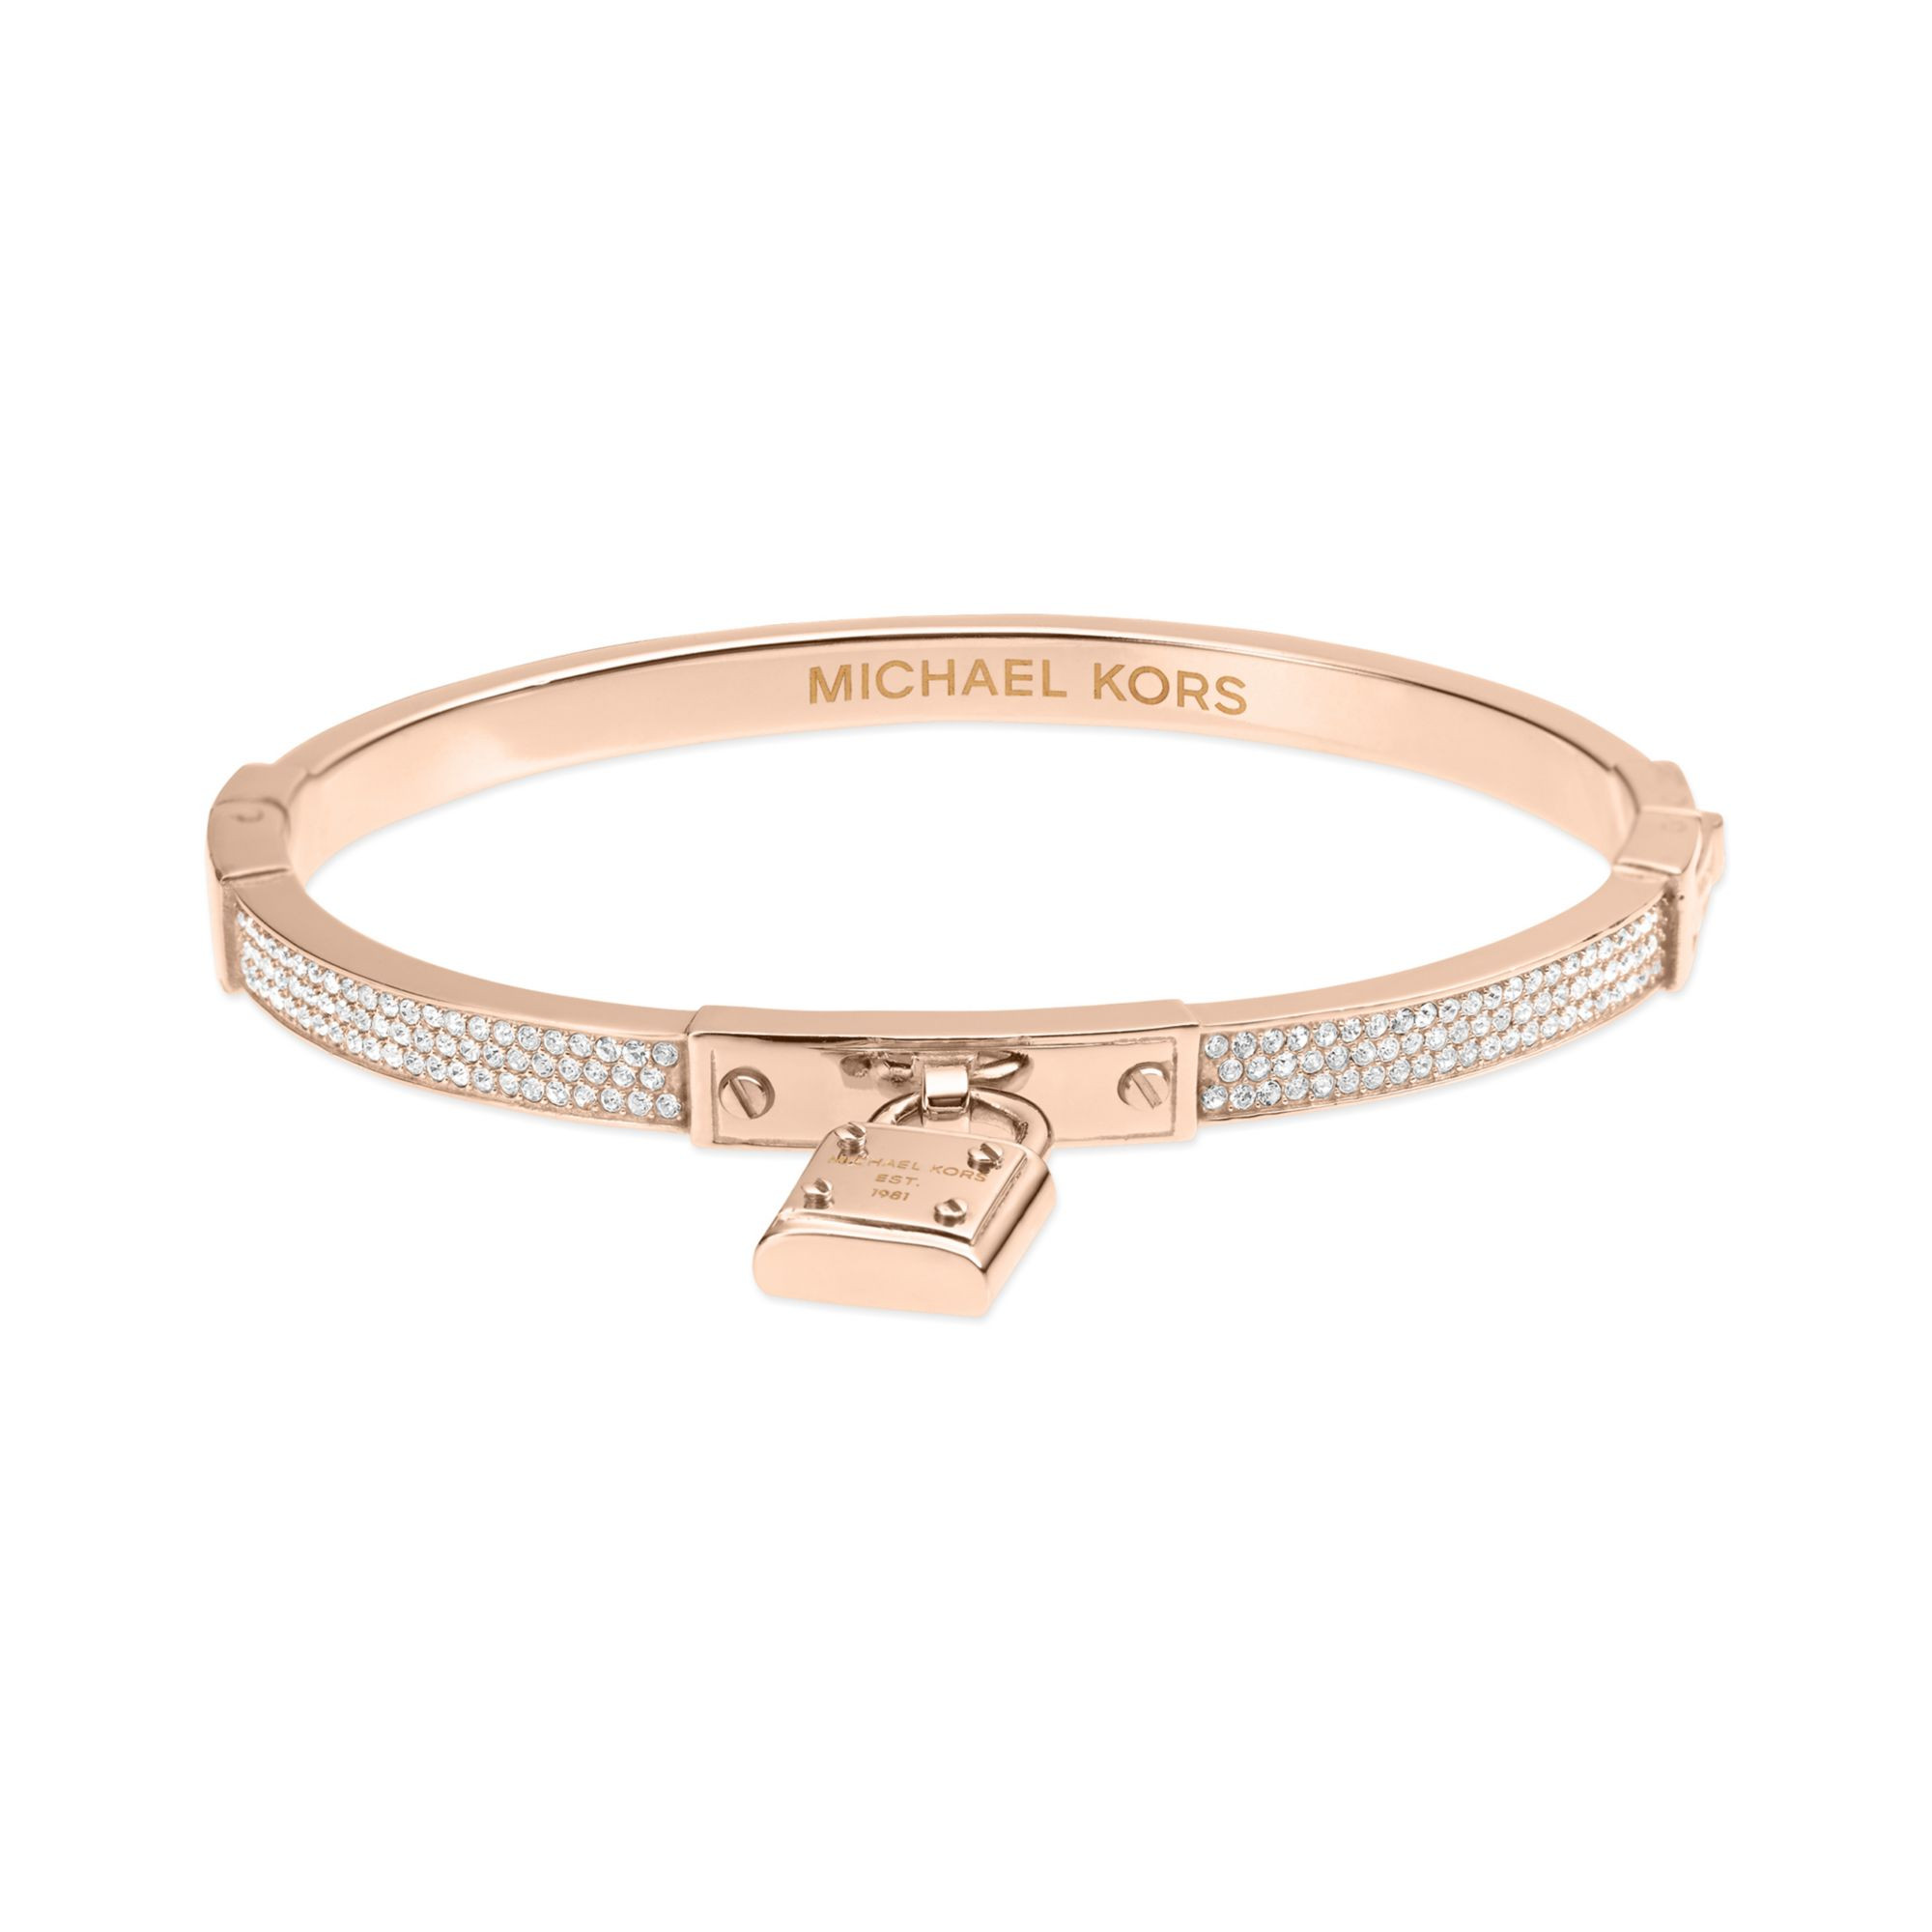 Michael Kors Bracelet
 Michael Kors Rose Gold Tone Padlock Charm Bracelet in Pink